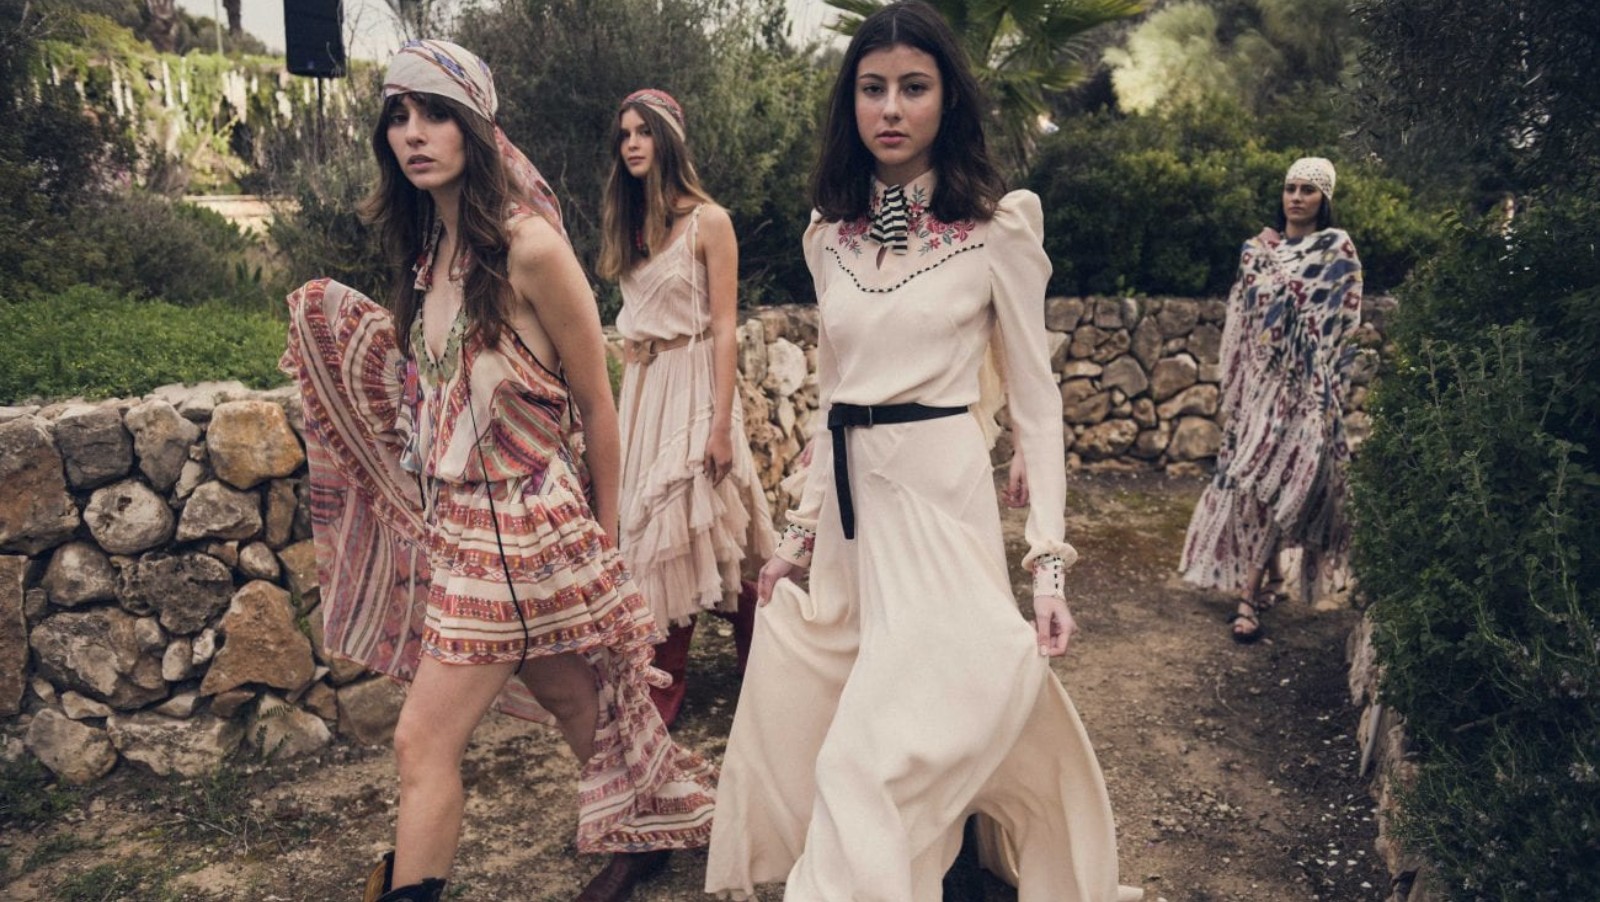 Israeli fashion gets creative during corona - ISRAEL21c